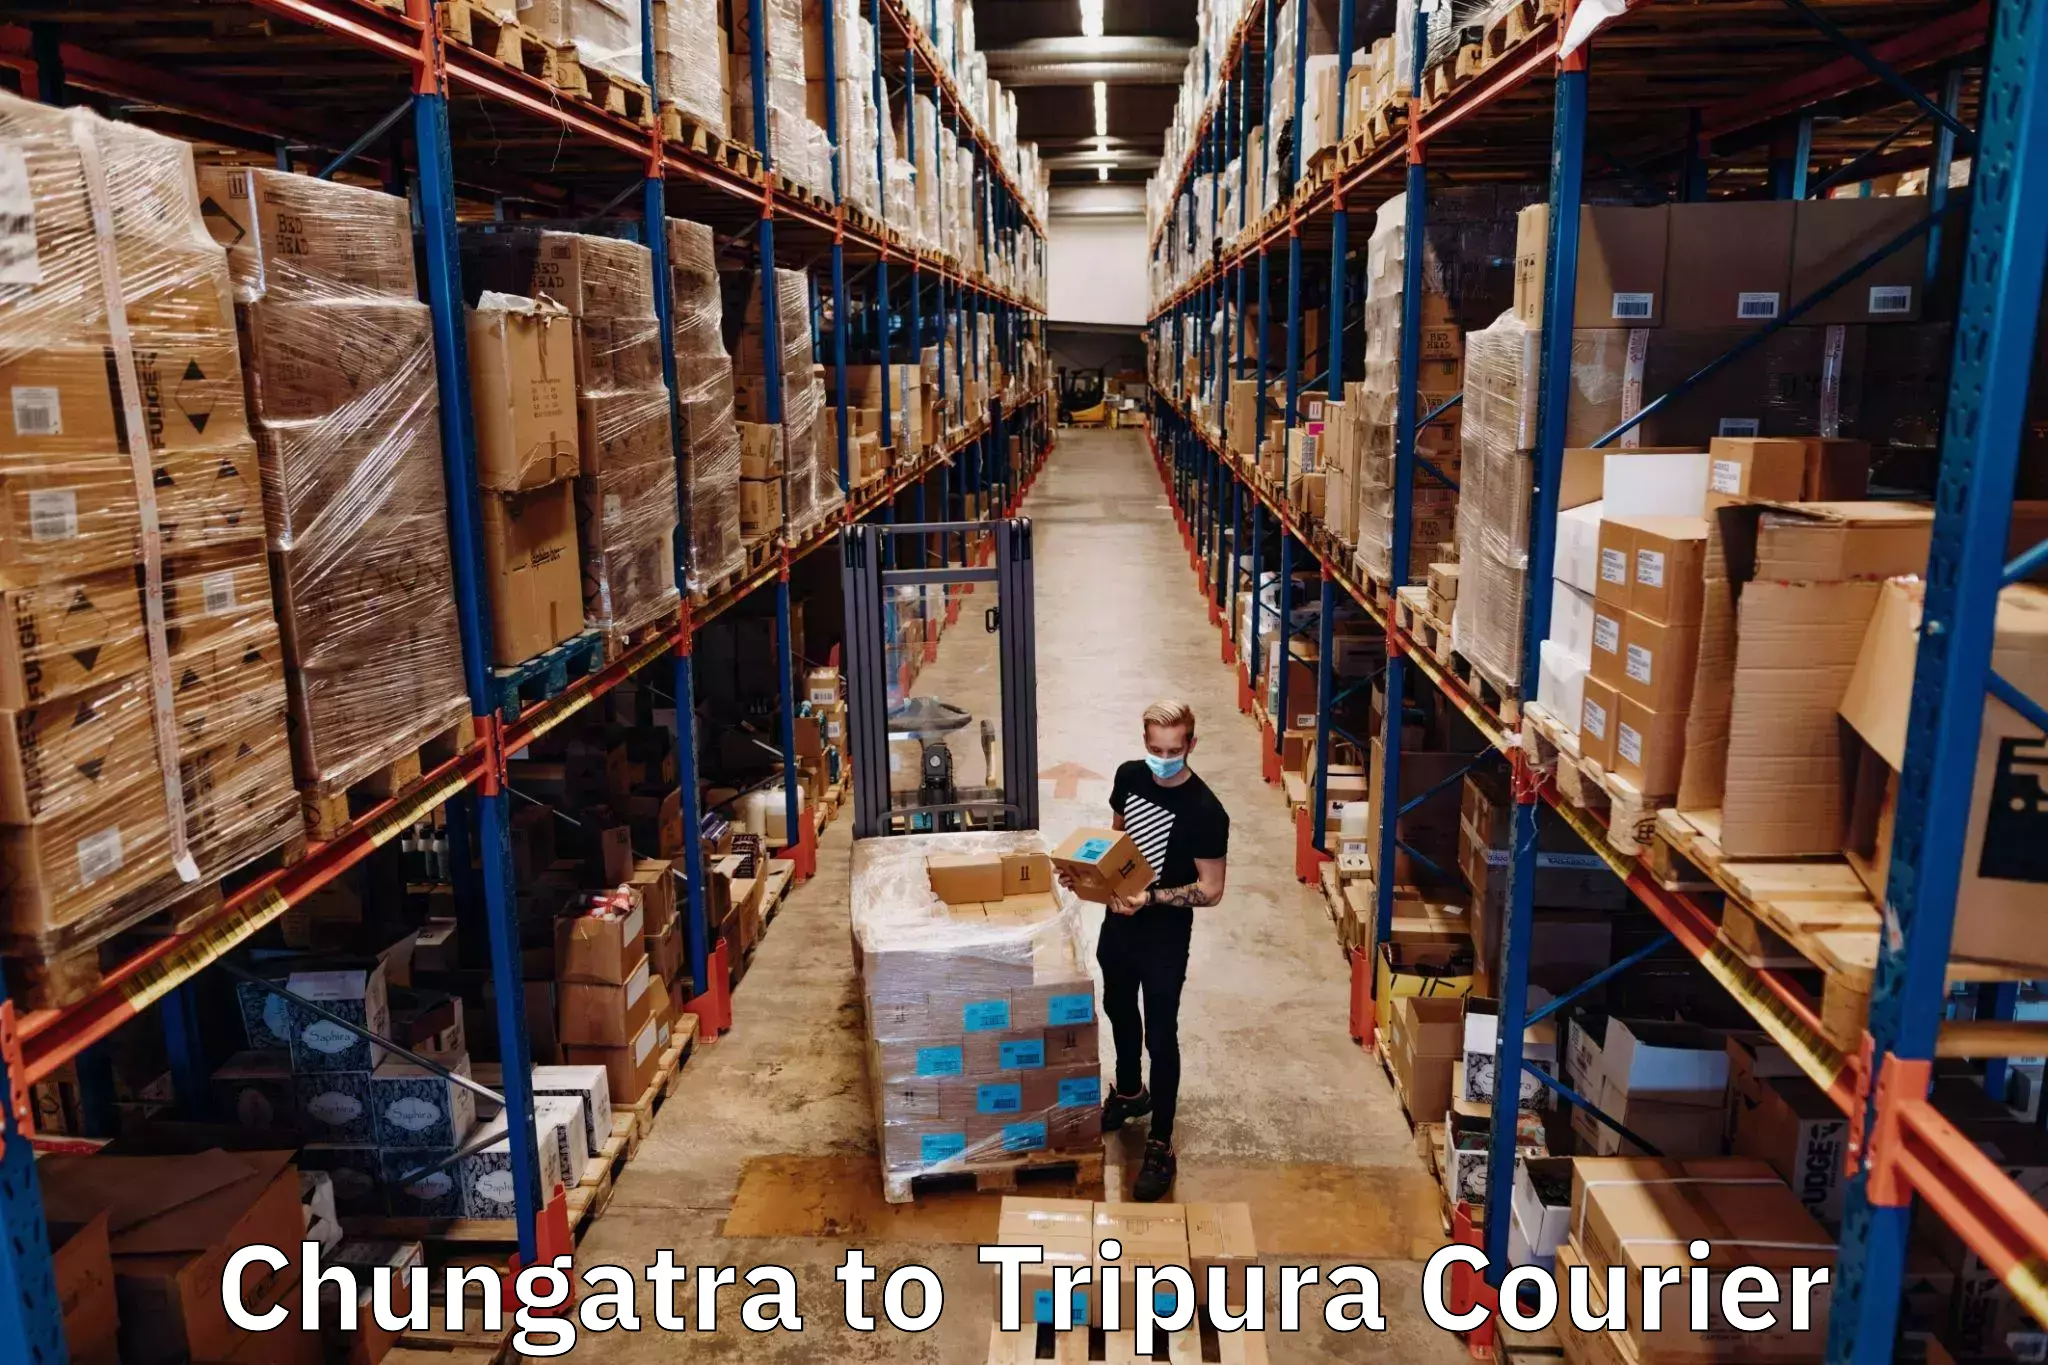 On-demand shipping options Chungatra to Udaipur Tripura